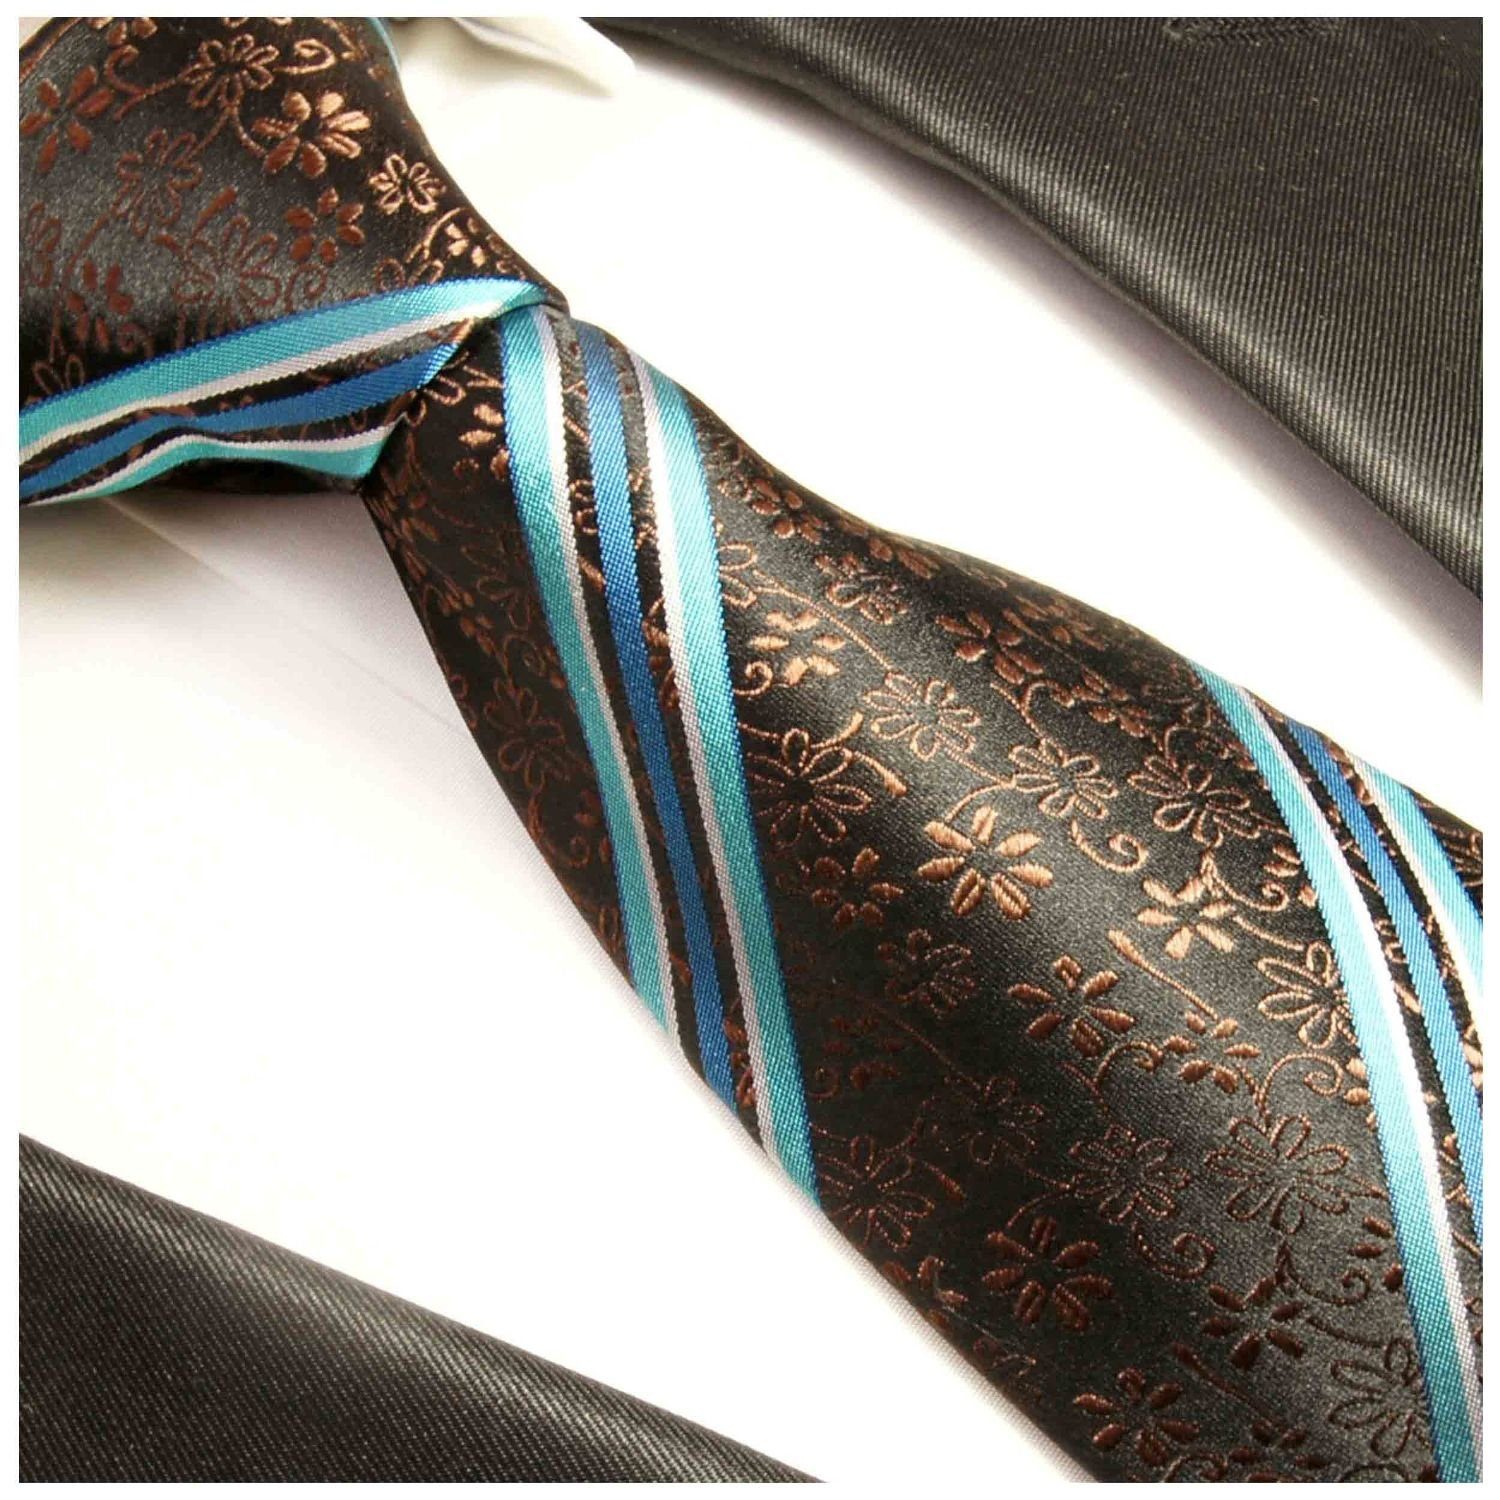 Paul Malone Krawatte Moderne 100% floral braun Herren Seide (6cm), gestreift türkis 394 Schmal Seidenkrawatte